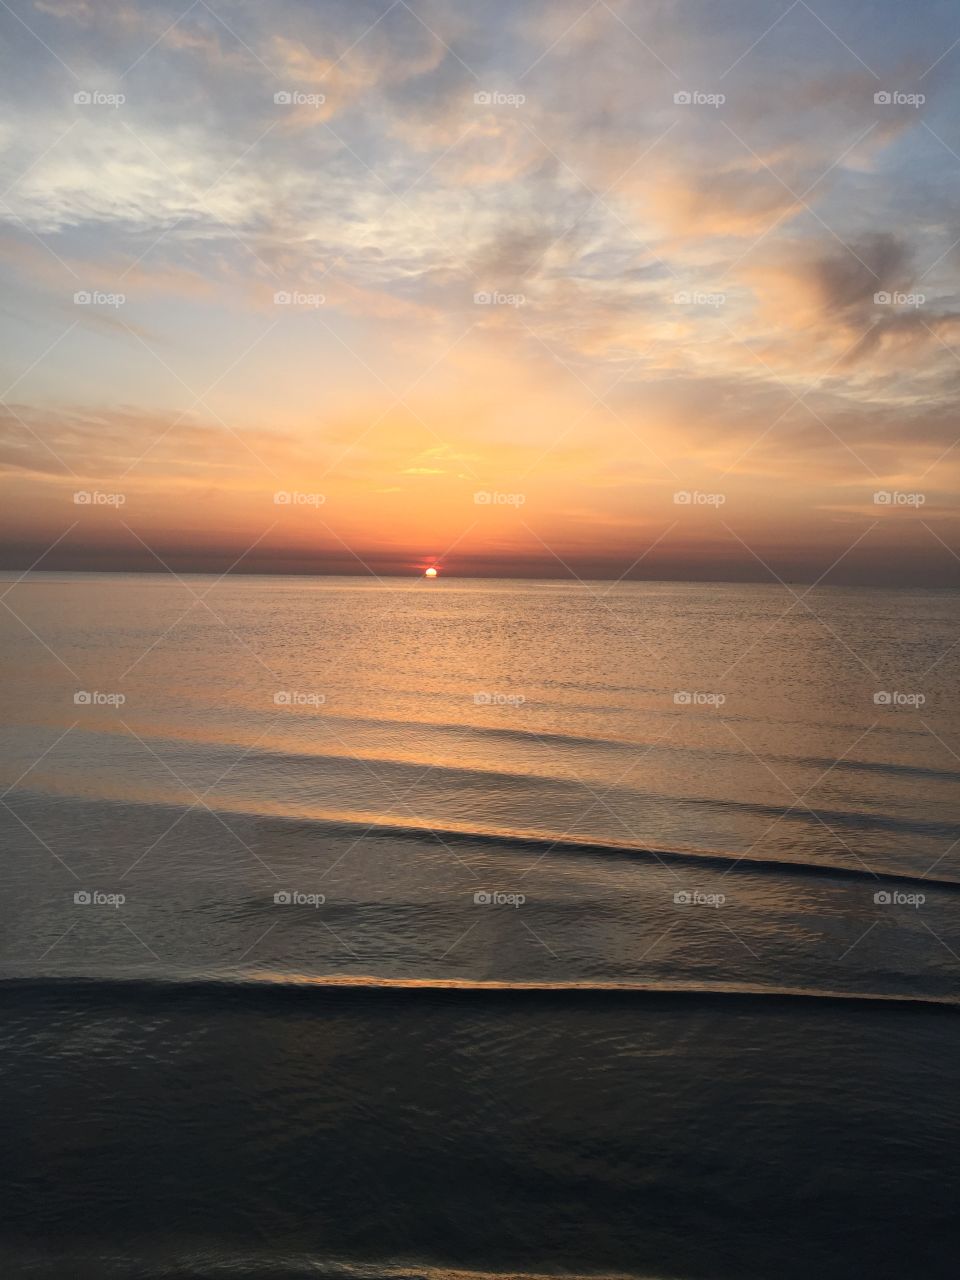 Gulf see 
sunrise